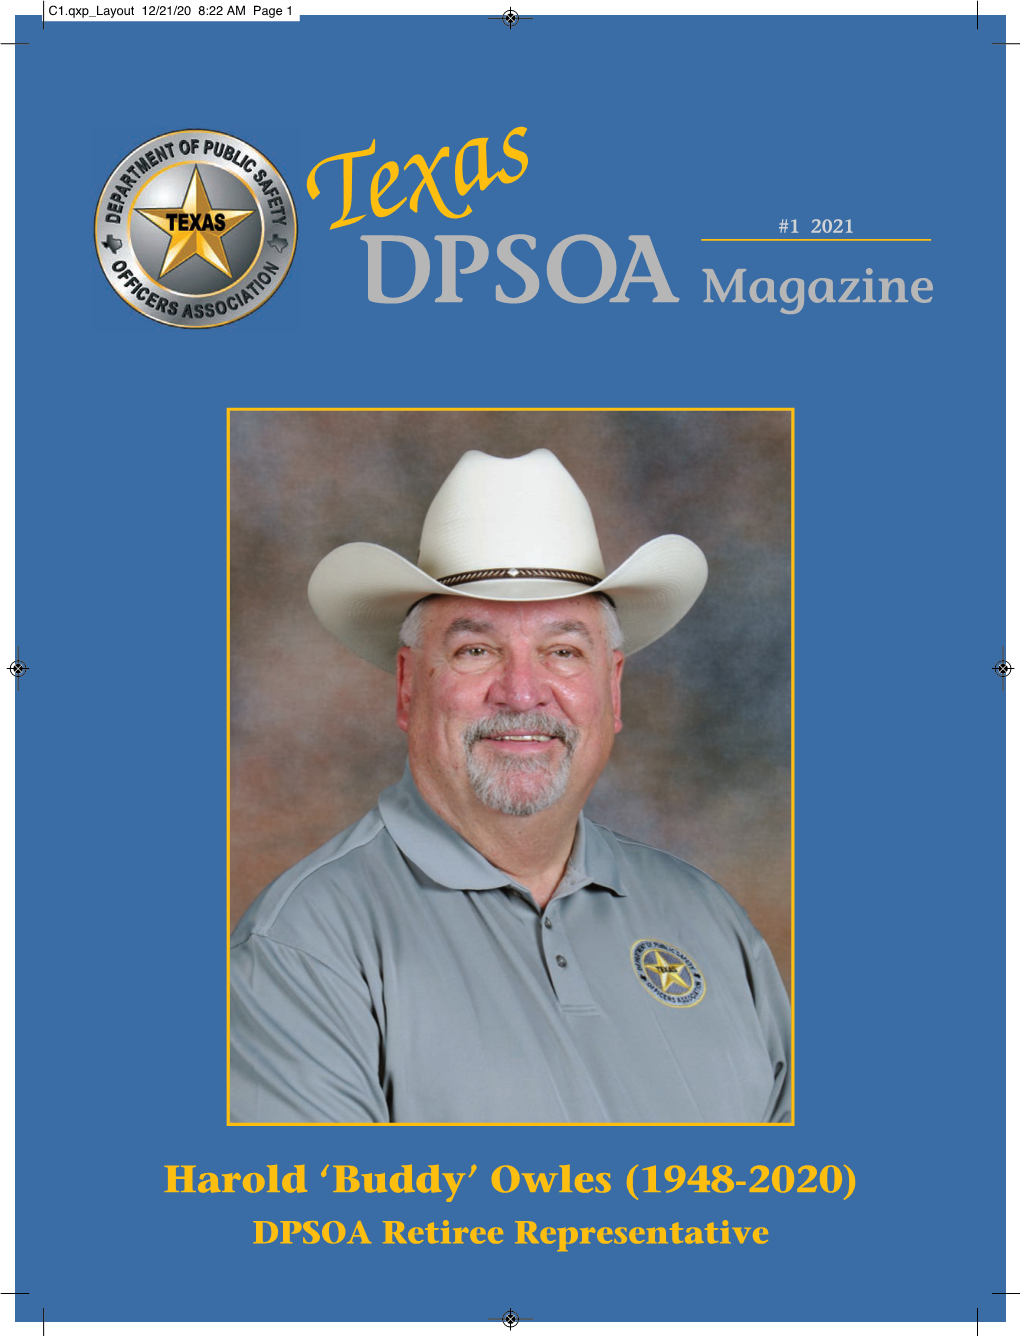 DPSOA Magazine